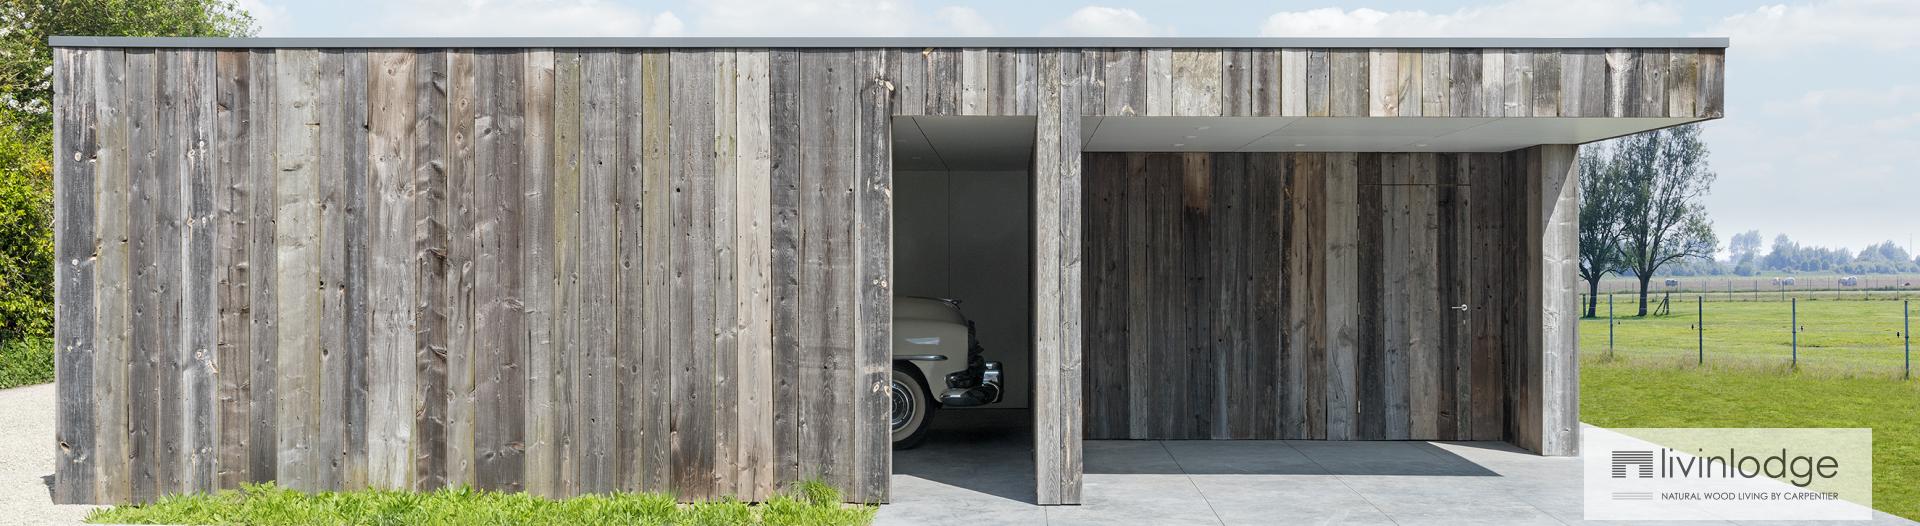 Modern carport in timber | Livinlodge